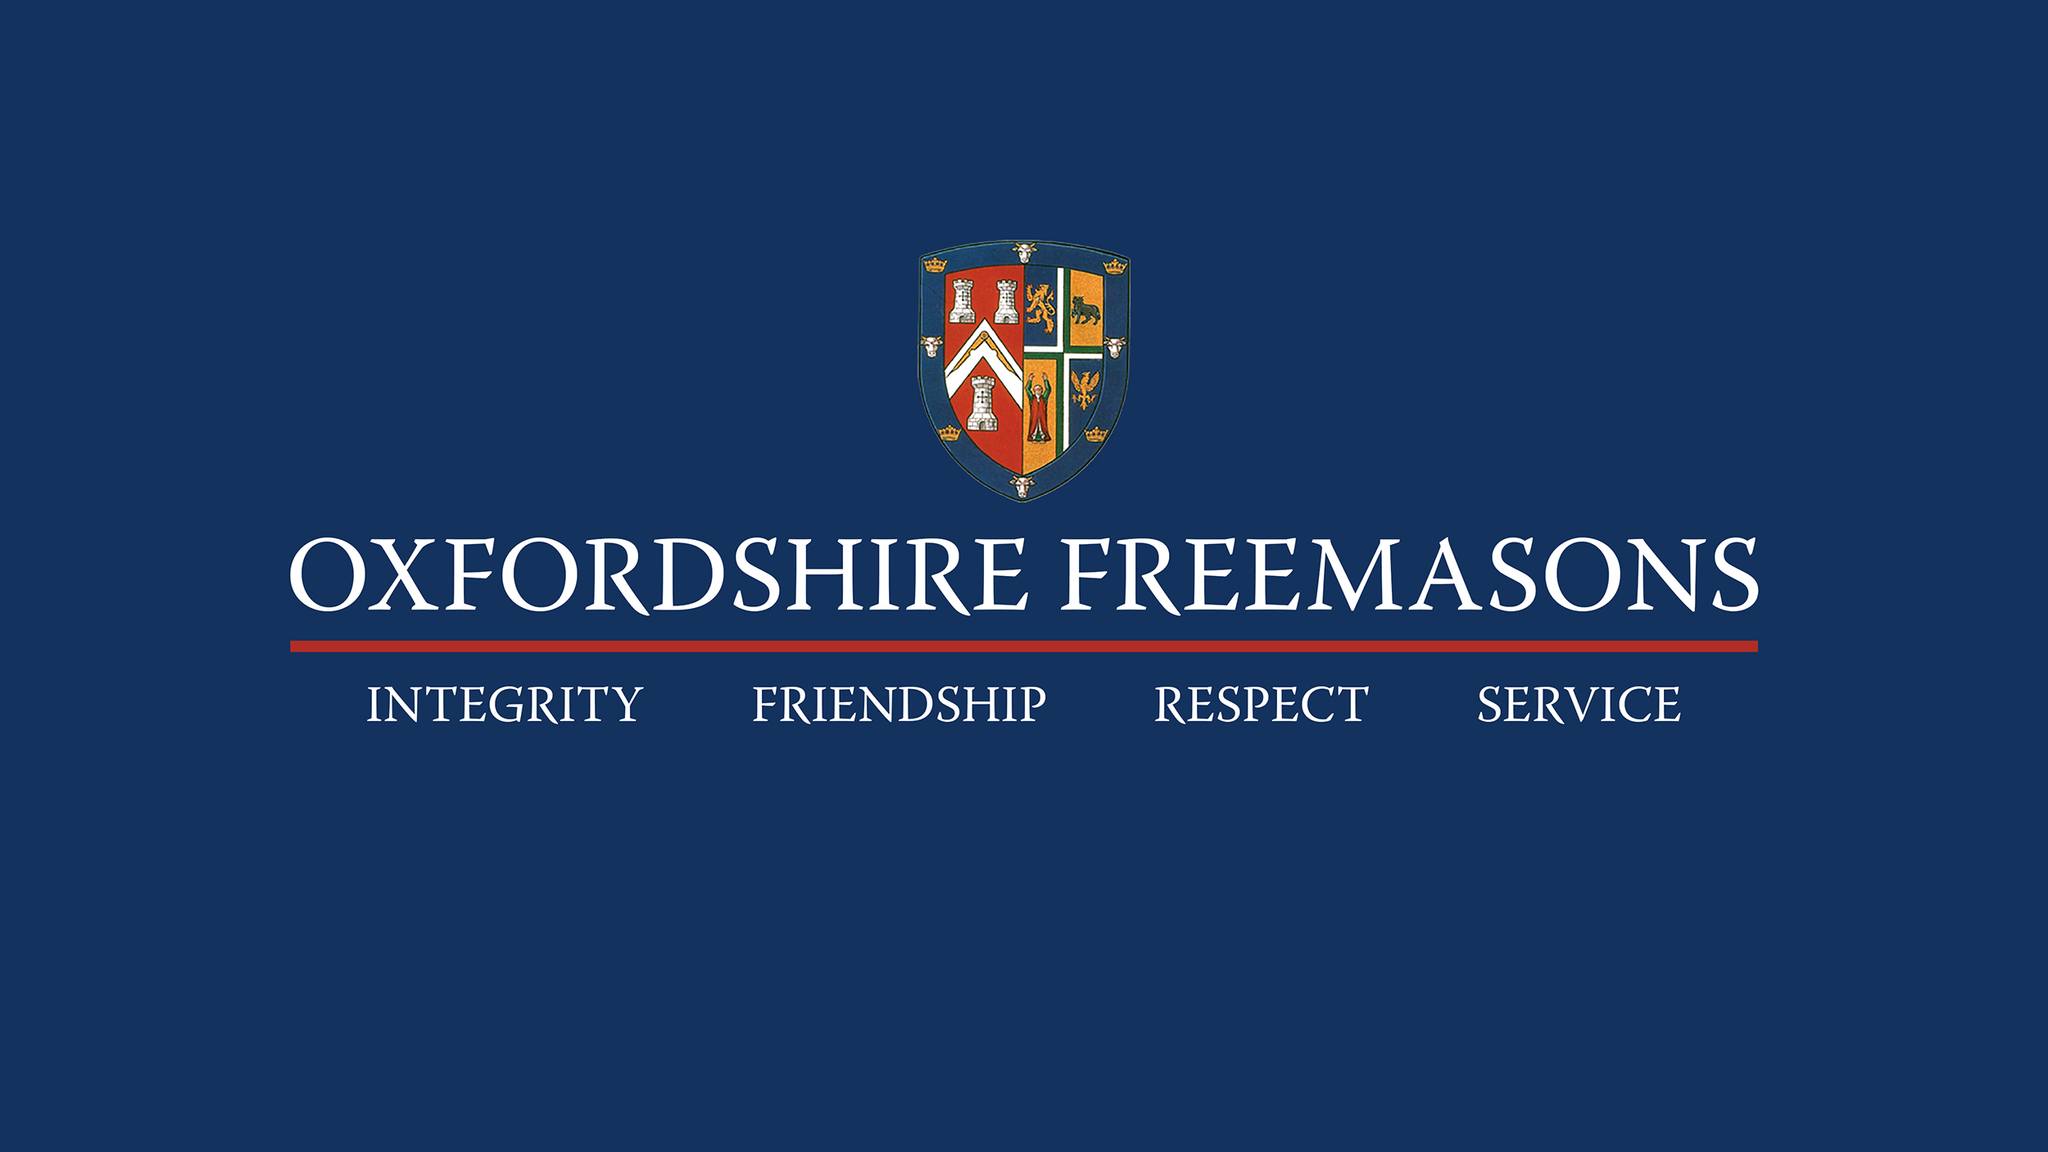 Oxfordshire/UK - Banbury Freemasons, Cherwell 599 Lodge donate £6,500 to Crohn's and Colitis UK